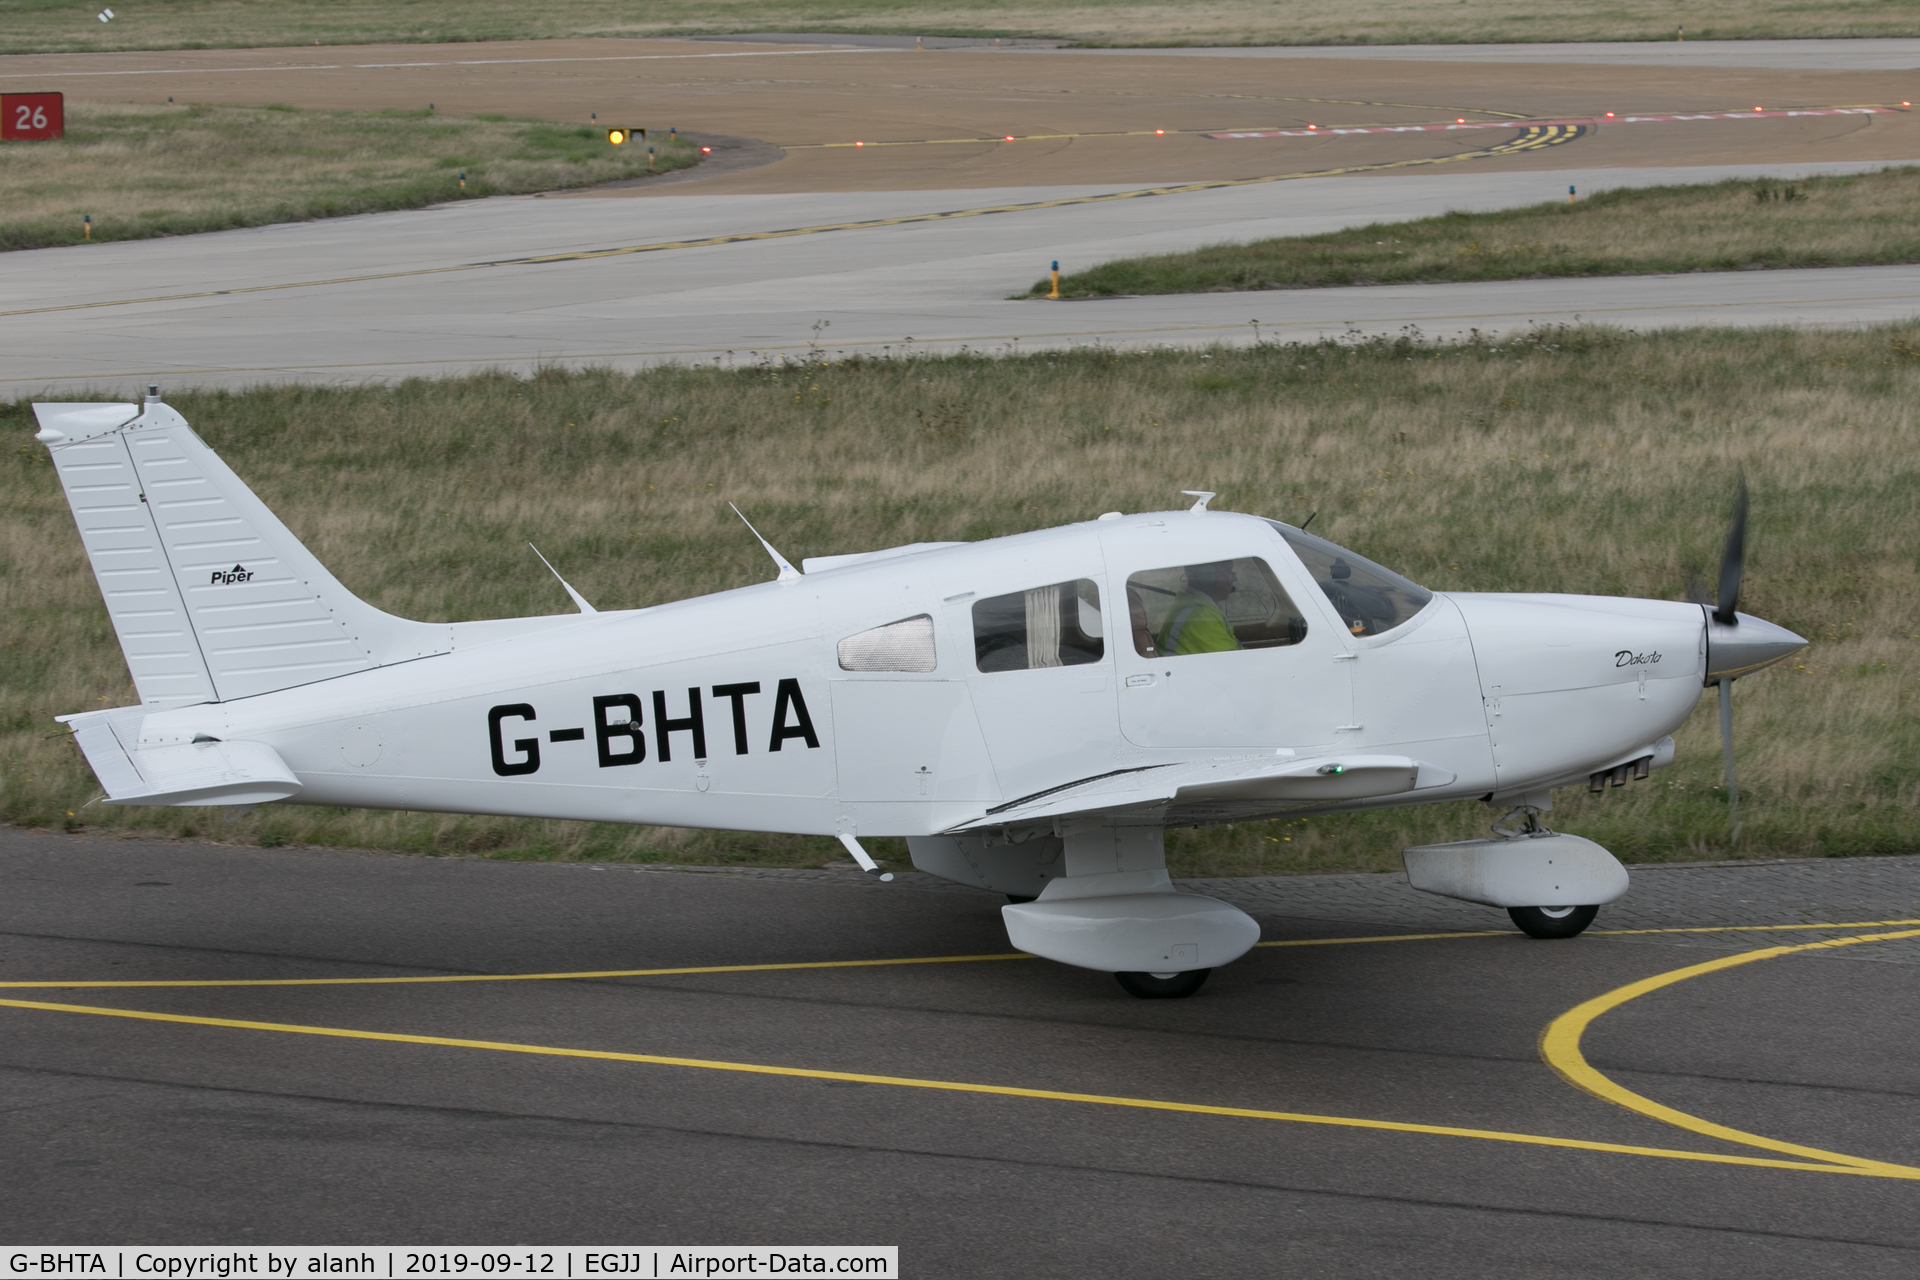 G-BHTA, 1980 Piper PA-28-236 Dakota Dakota C/N 28-8011102, In Jersey, CI, with an all-white scheme